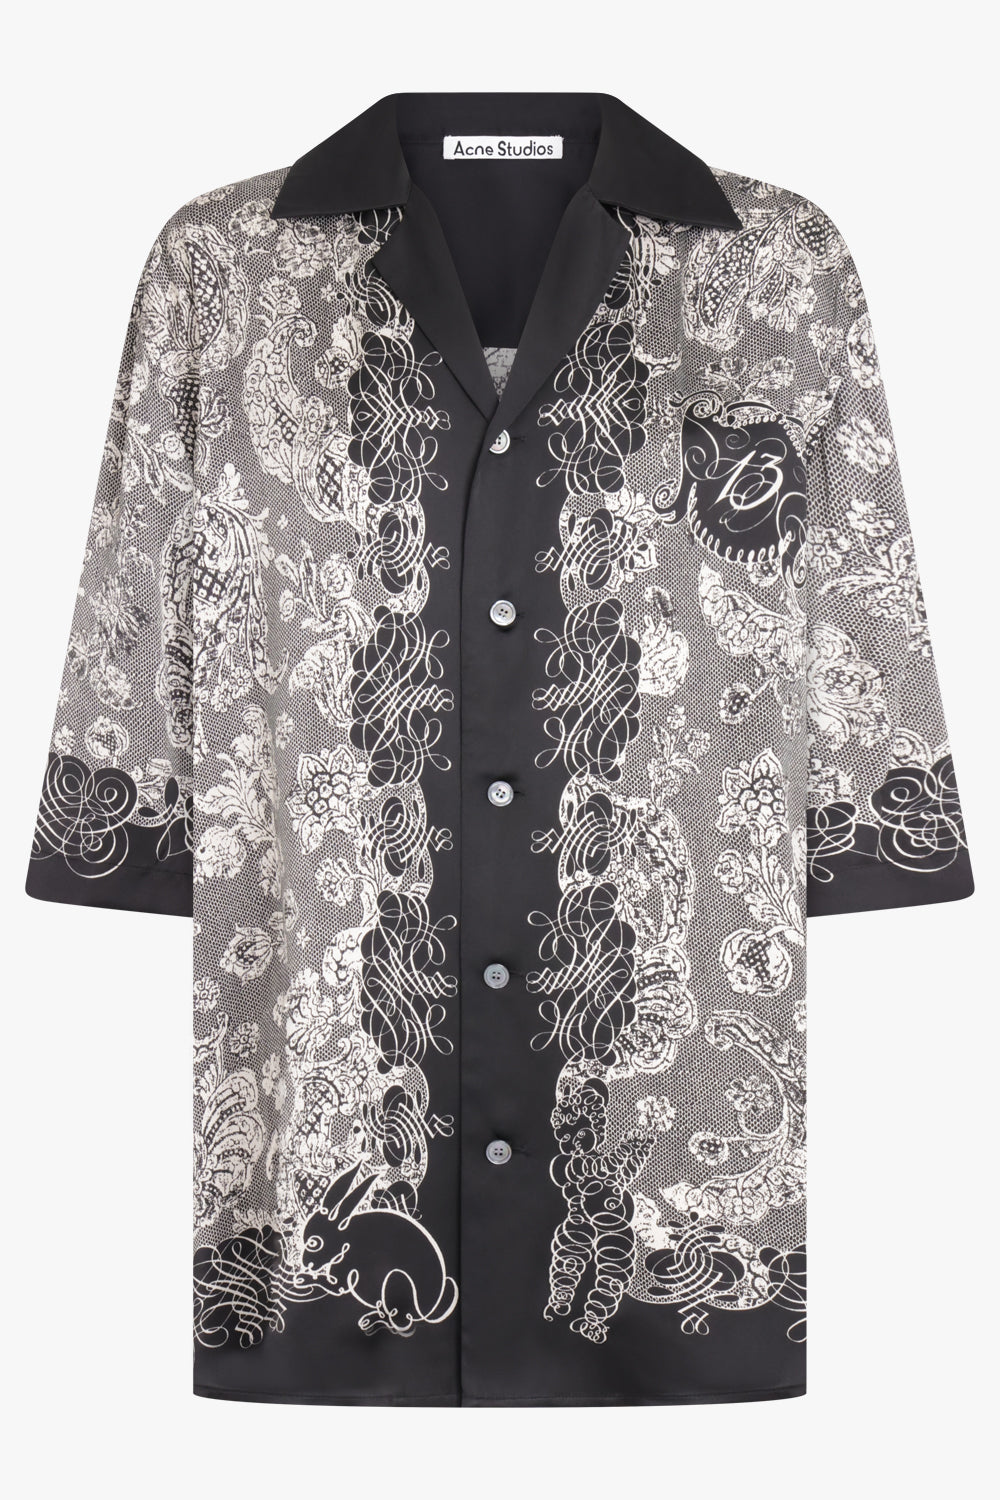 ACNE STUDIOS SHIRTS Paisley Print Short Sleeve Shirt | Black